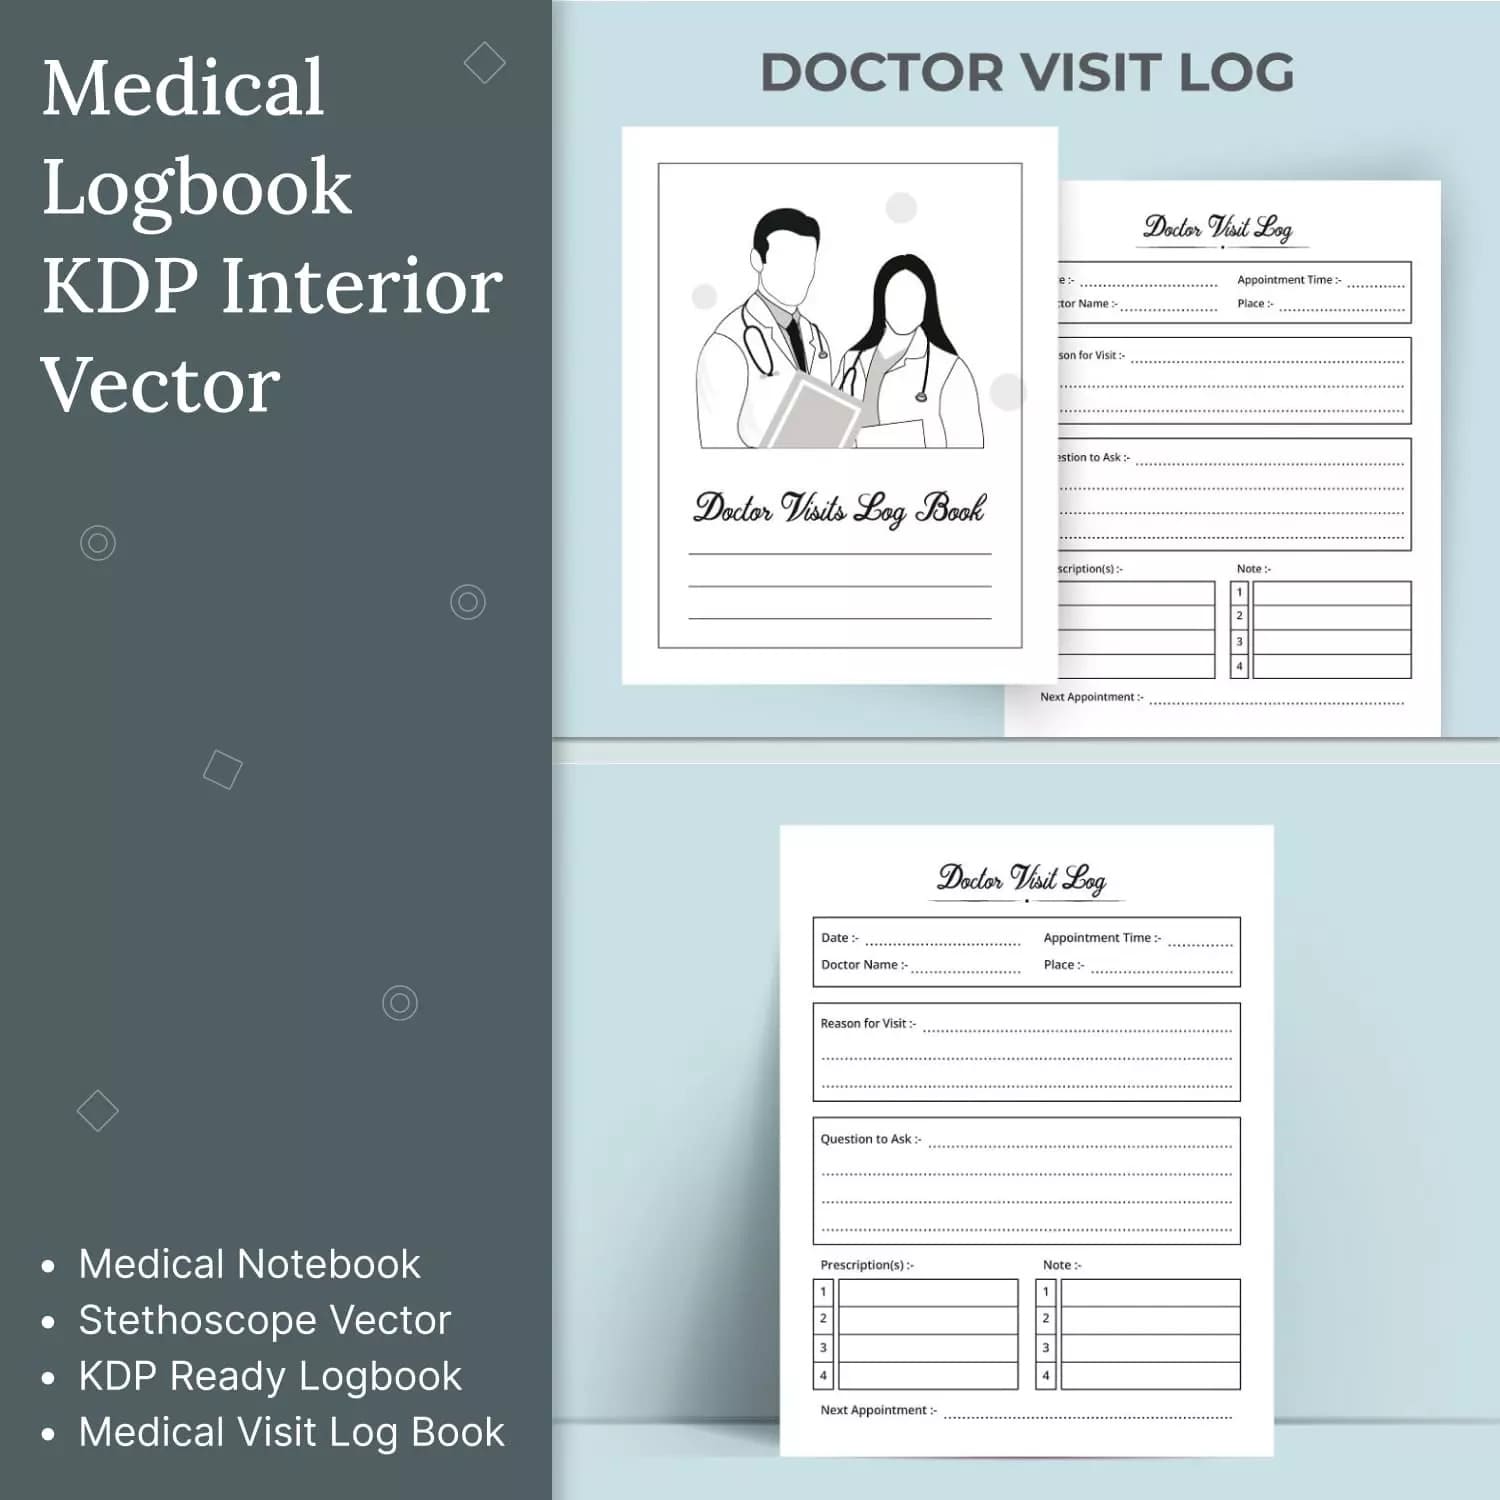 Medical Logbook Kdp Interior Vector Preview image.